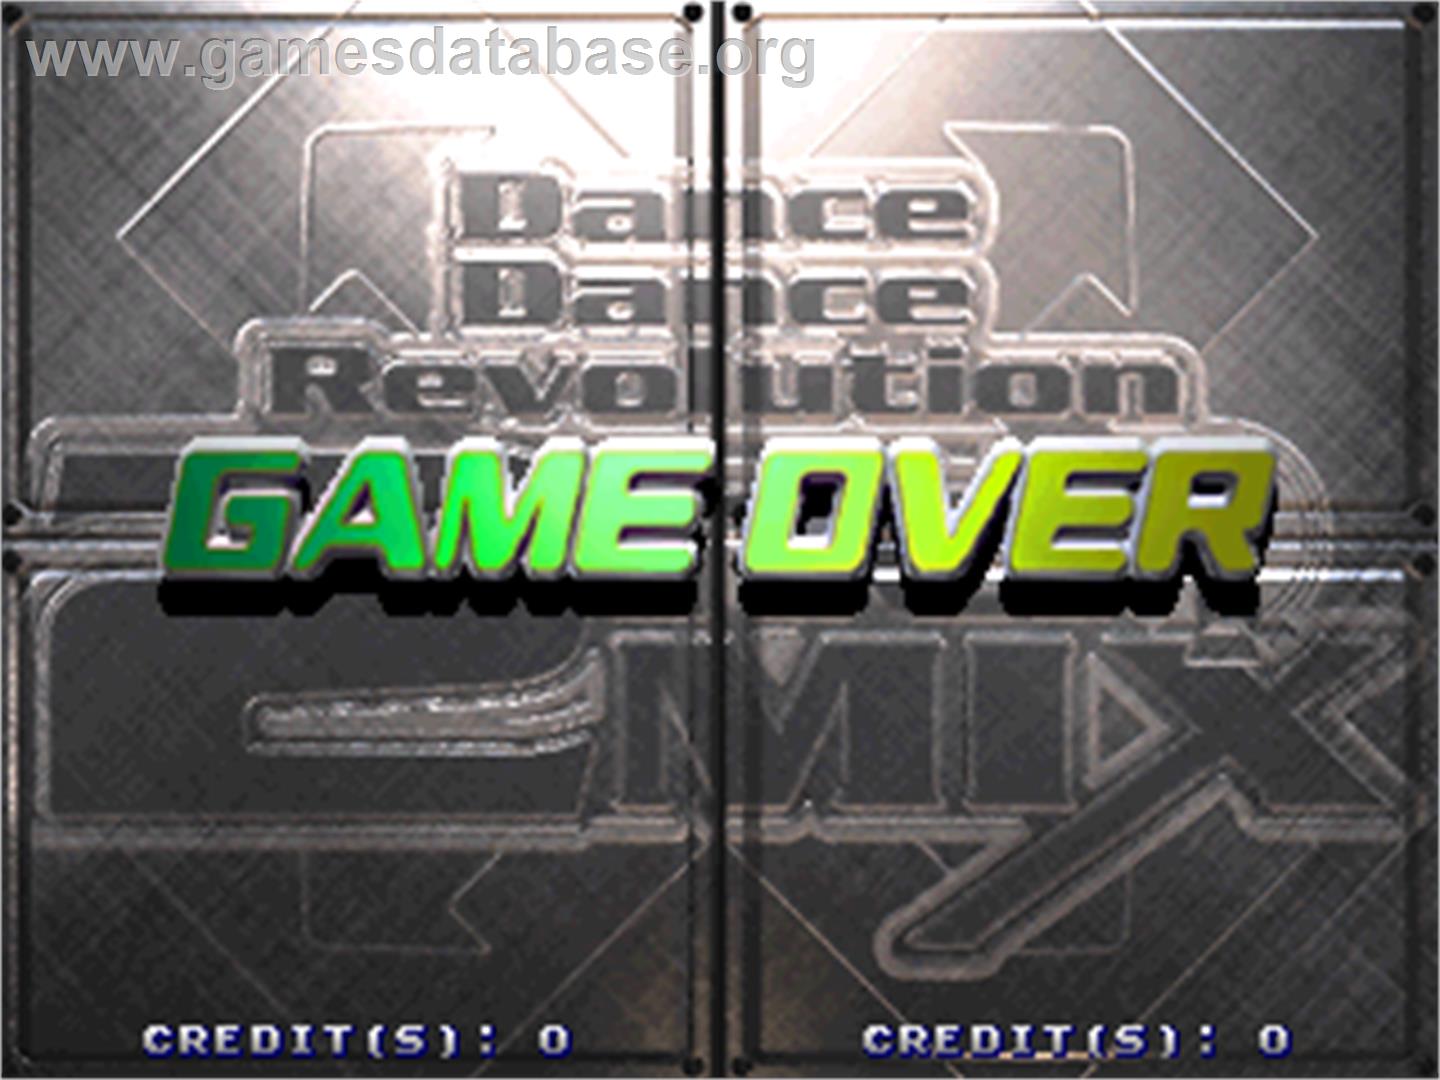 Dance Dance Revolution 2nd Mix - Link Ver - Arcade - Artwork - Game Over Screen